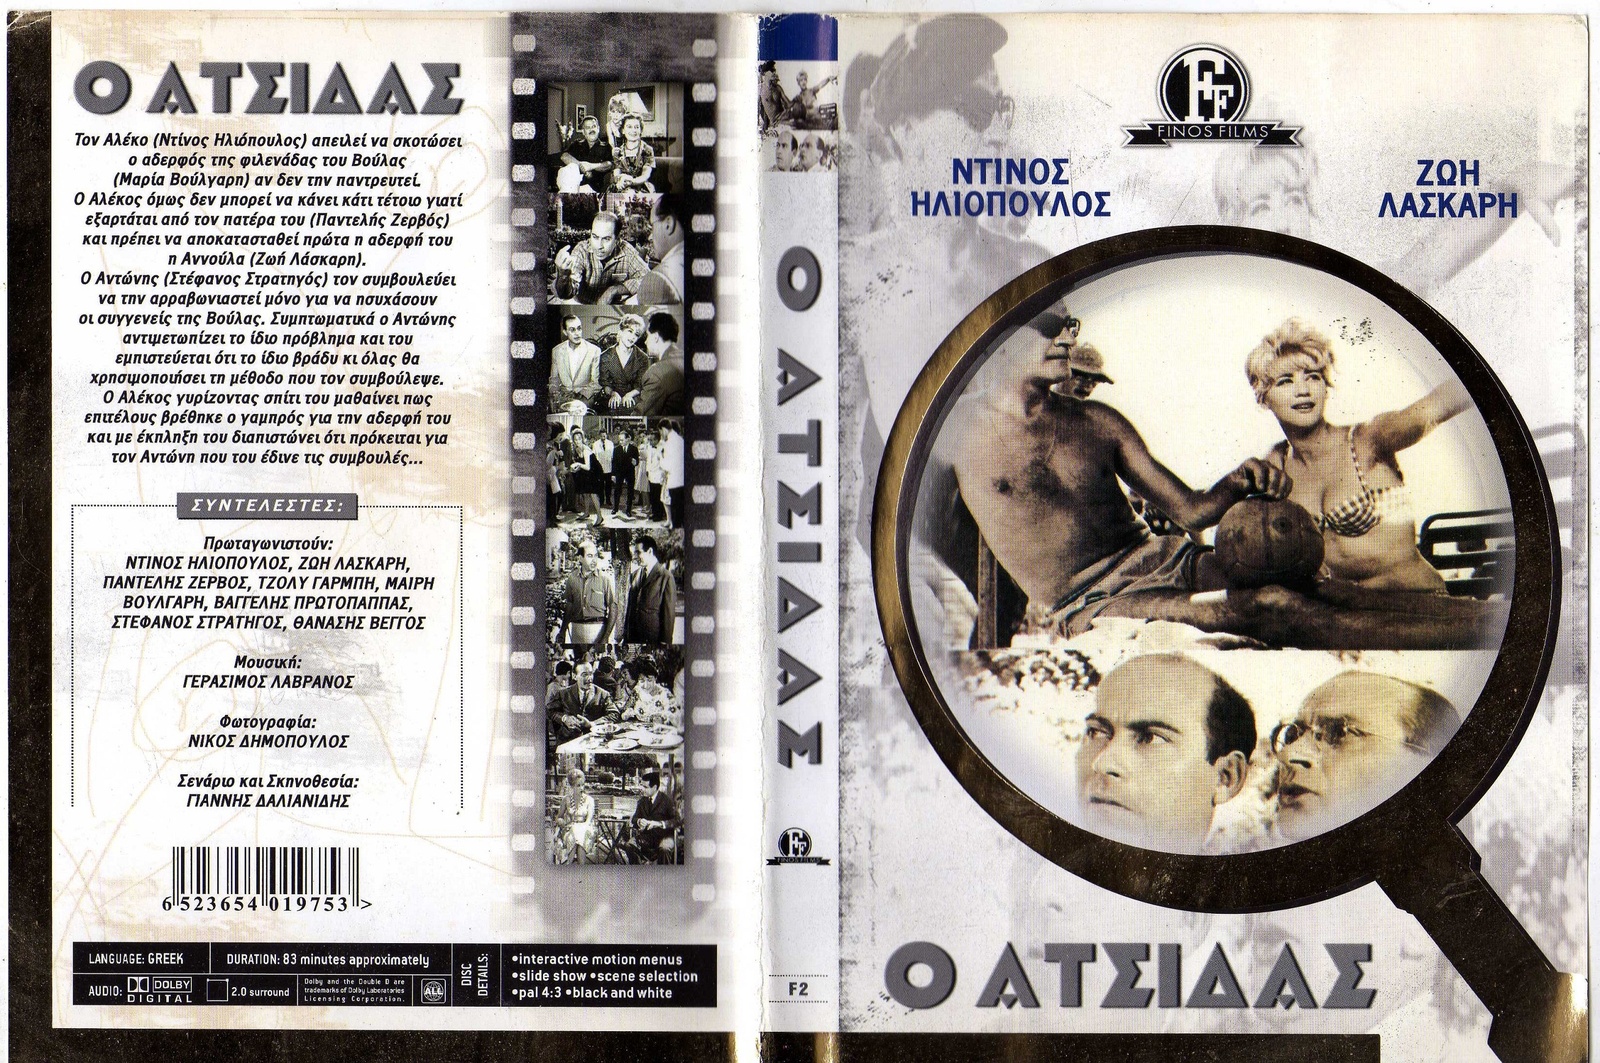 Finos FILM-Ο ΑΤΣΙΔΑΣ-O Atsidas (Greek Movie and similar items